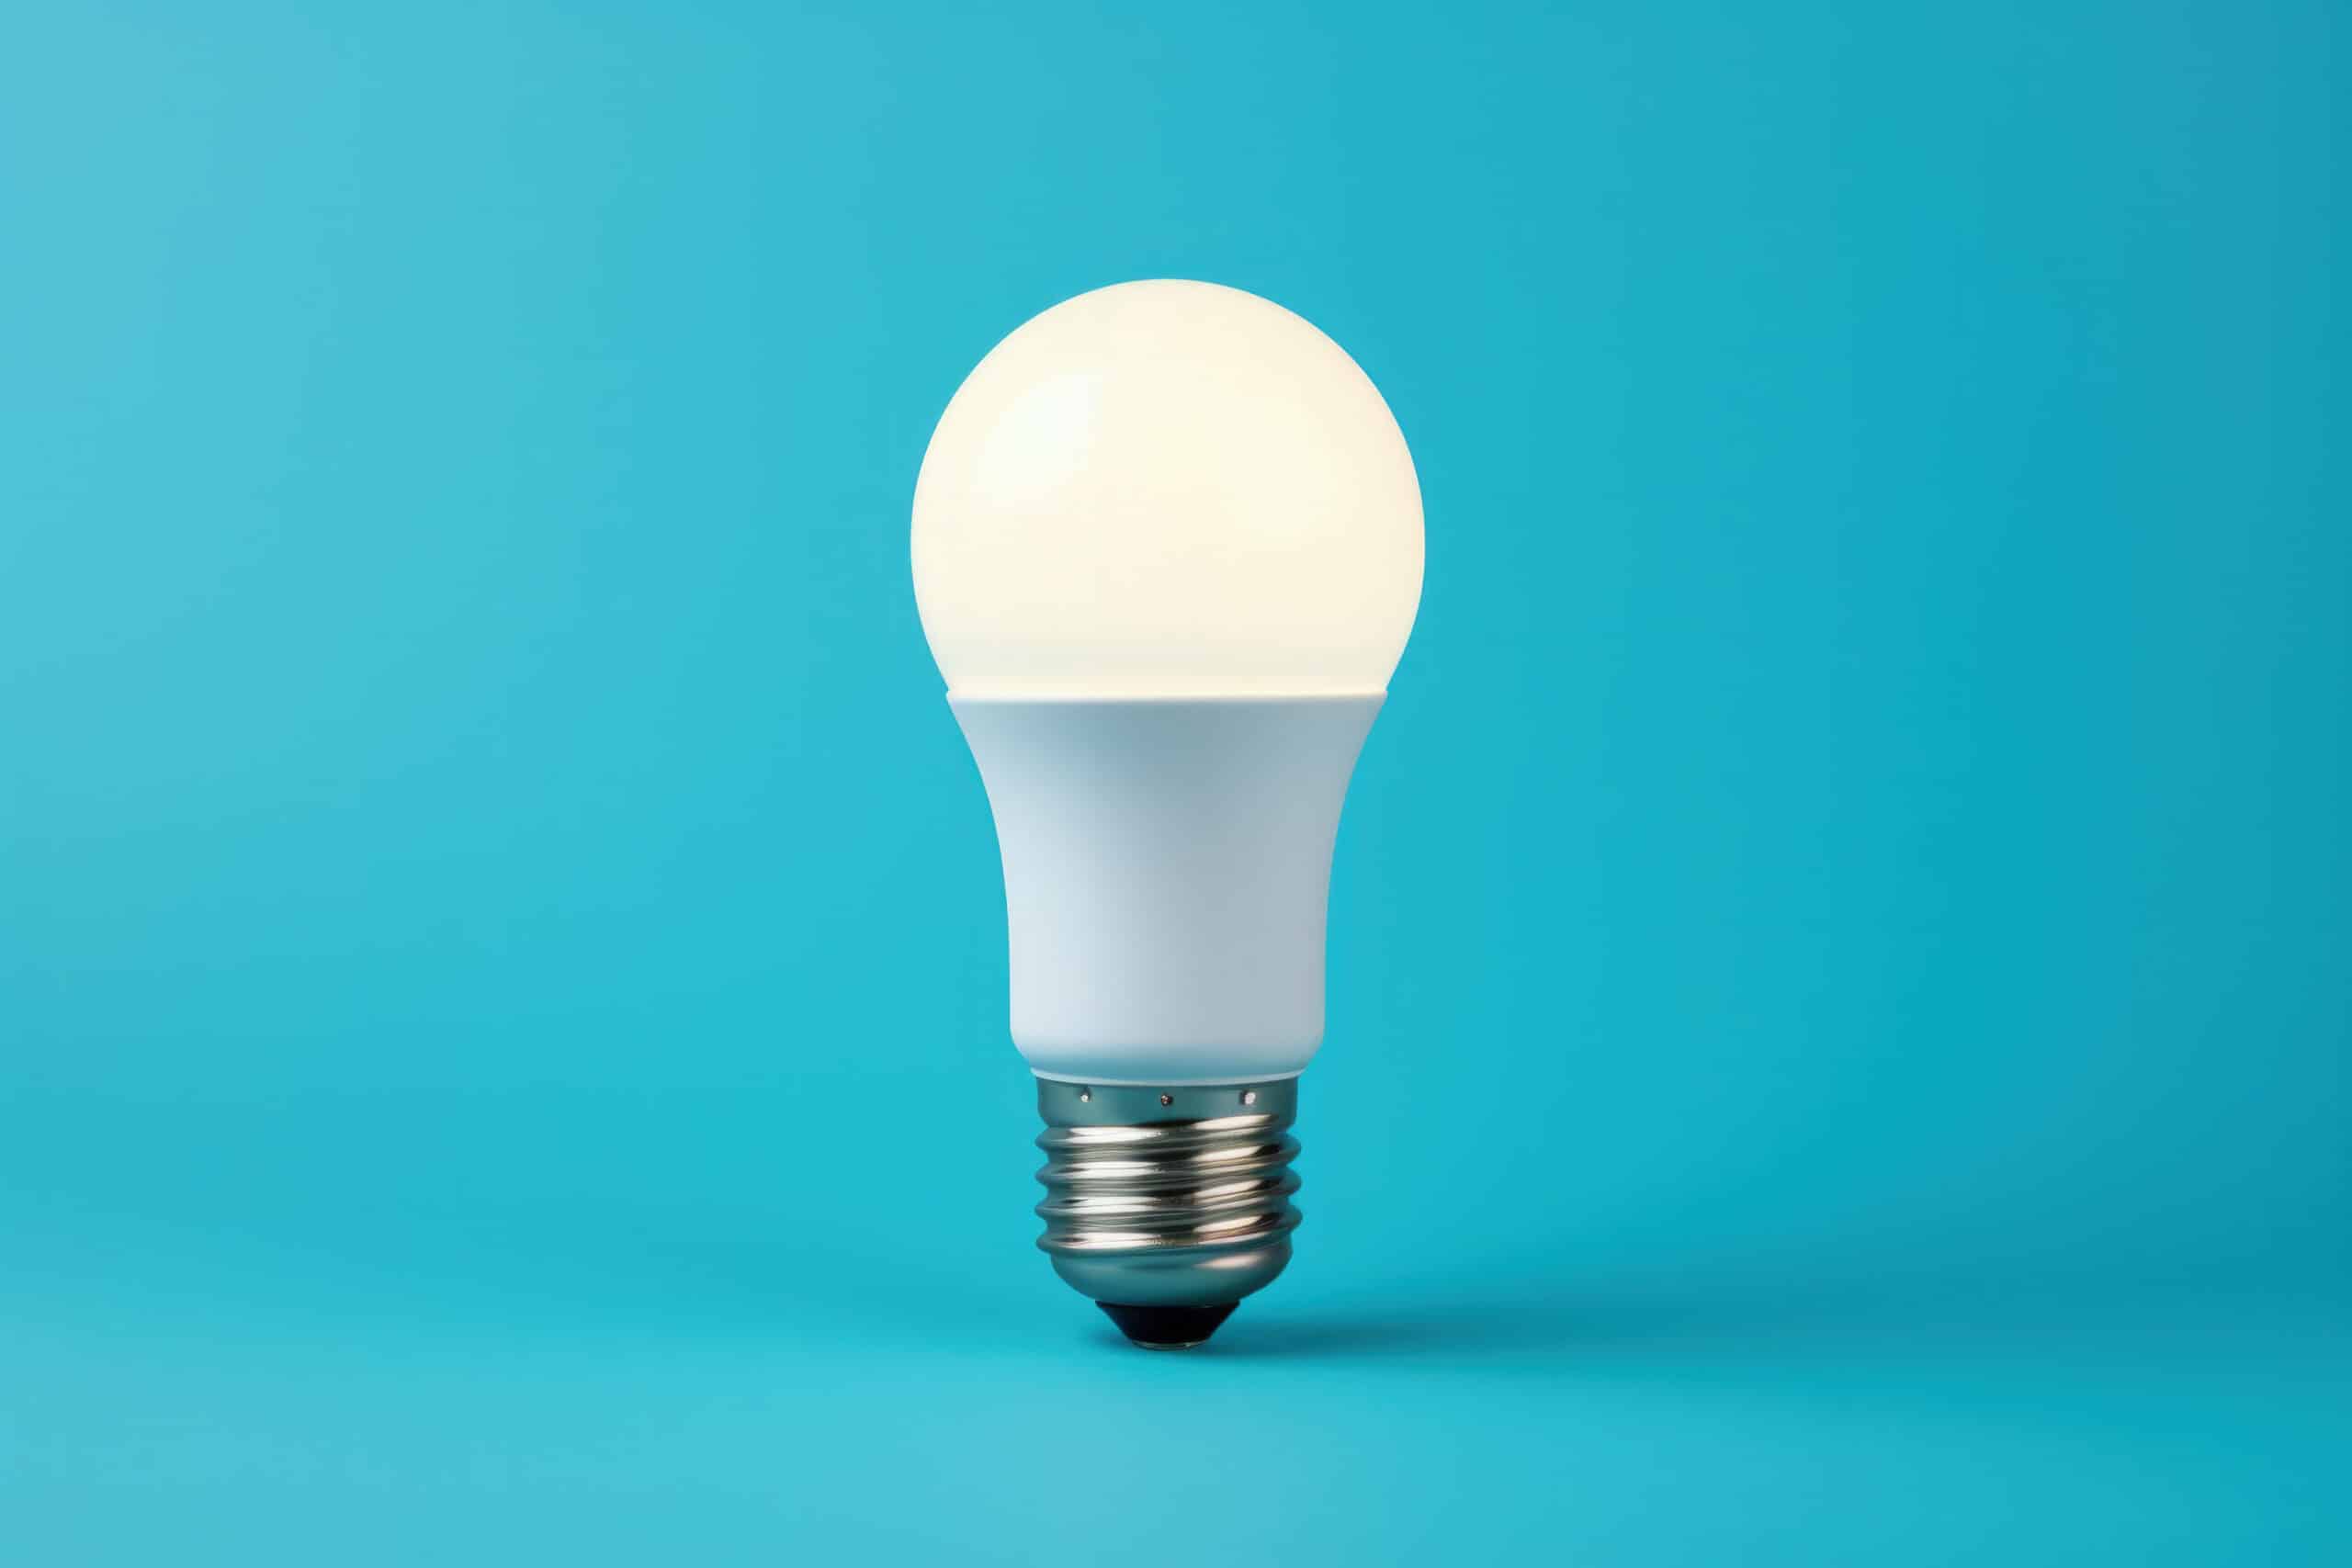 www.appr.com : What Is A Smart Light Bulb?